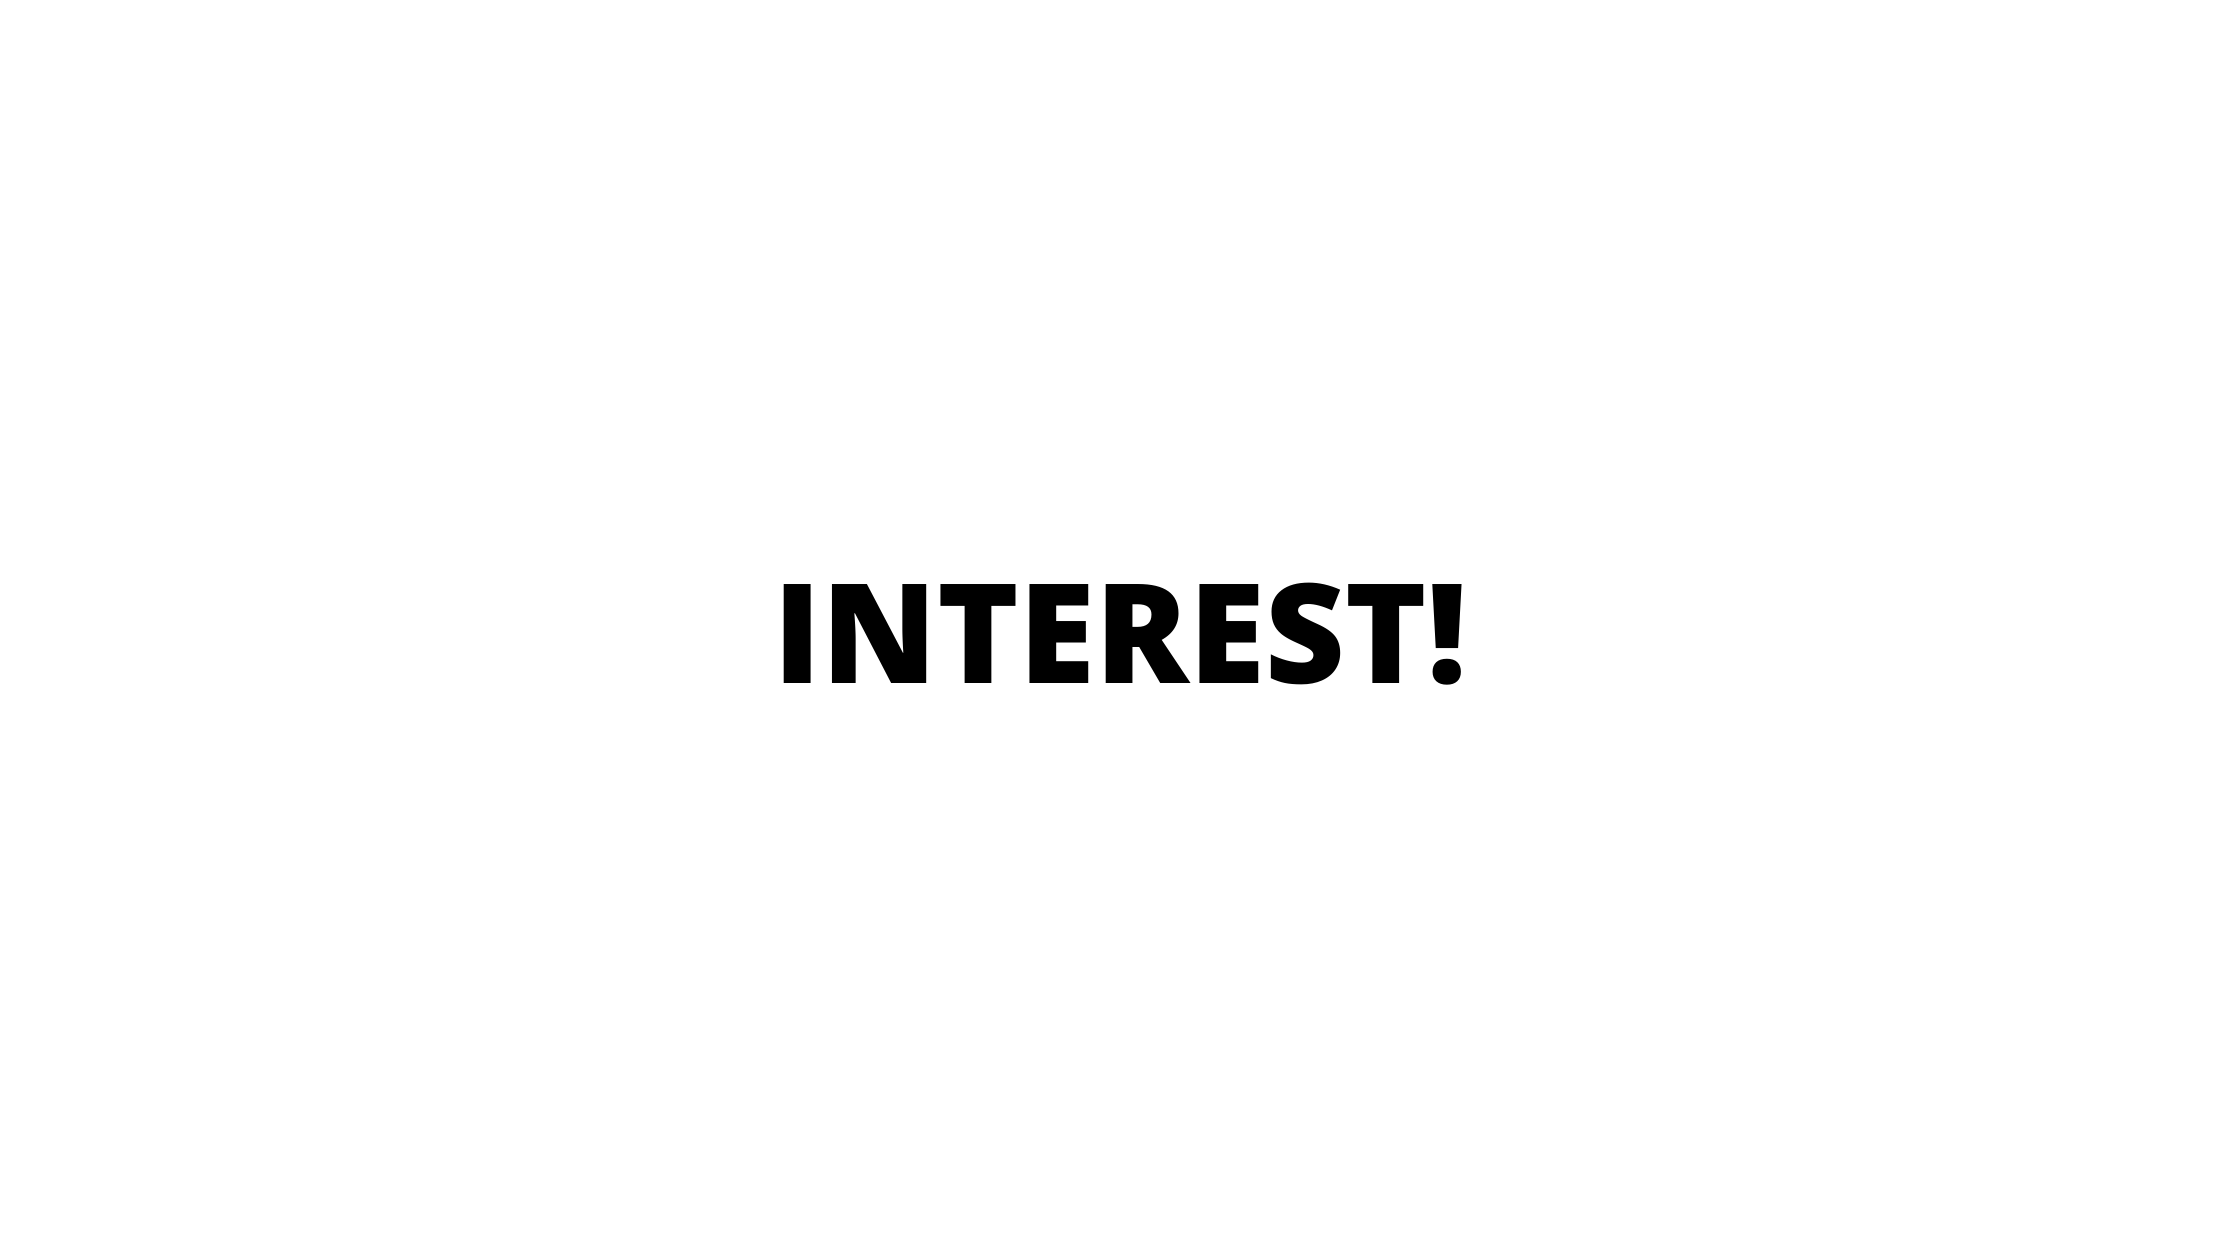 Interest!